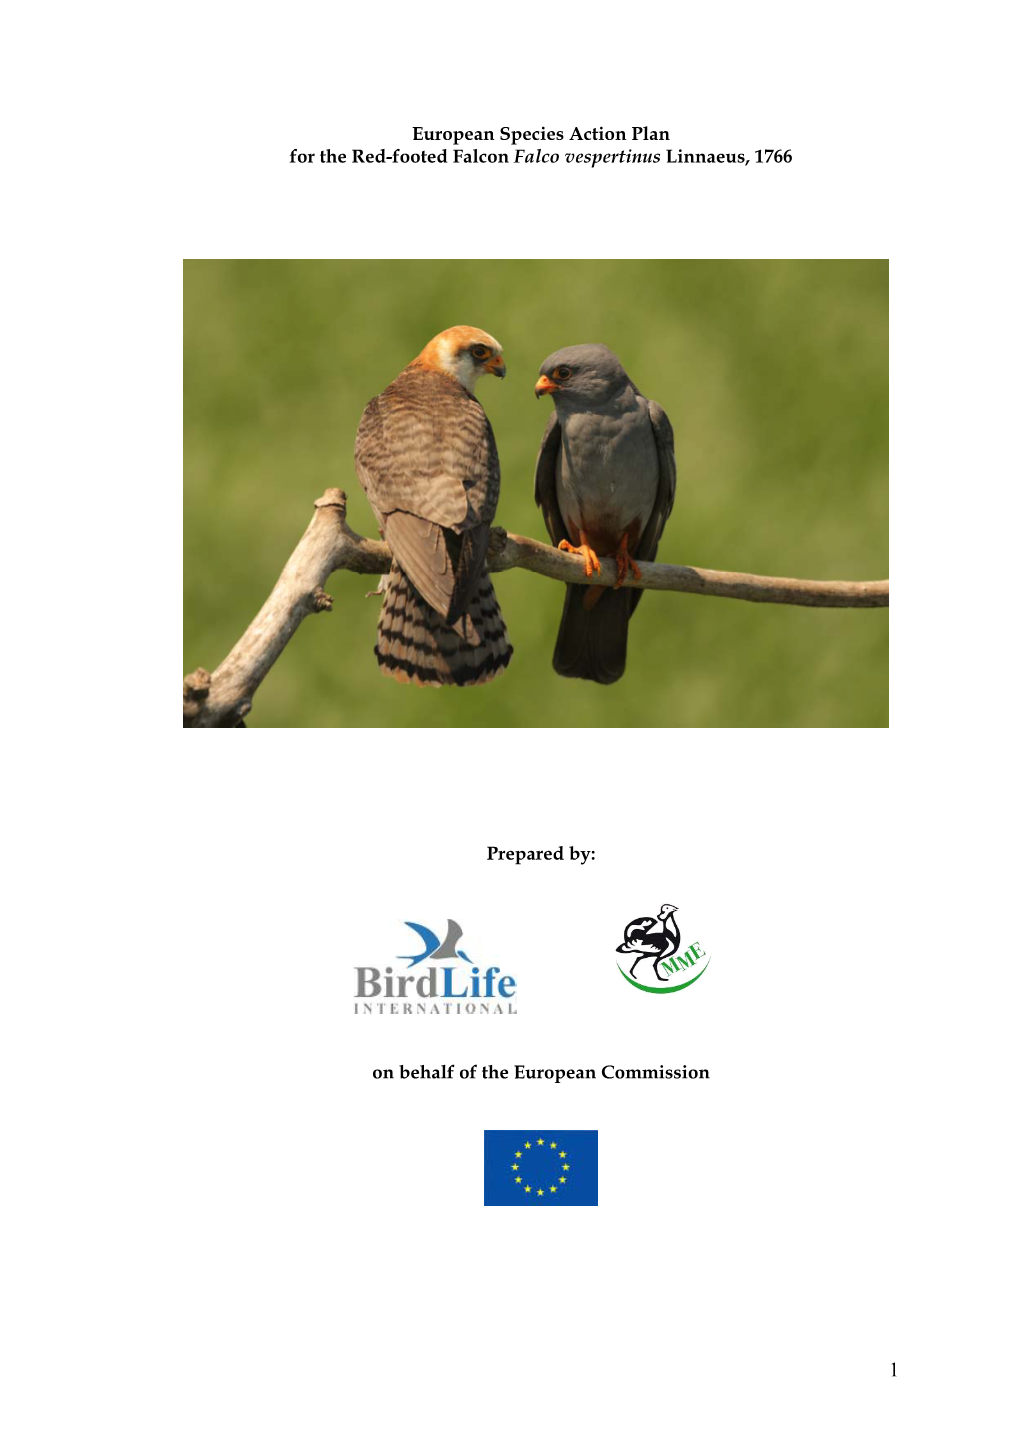 European Species Action Plan for the Red-Footed Falcon Falco Vespertinus Linnaeus, 1766